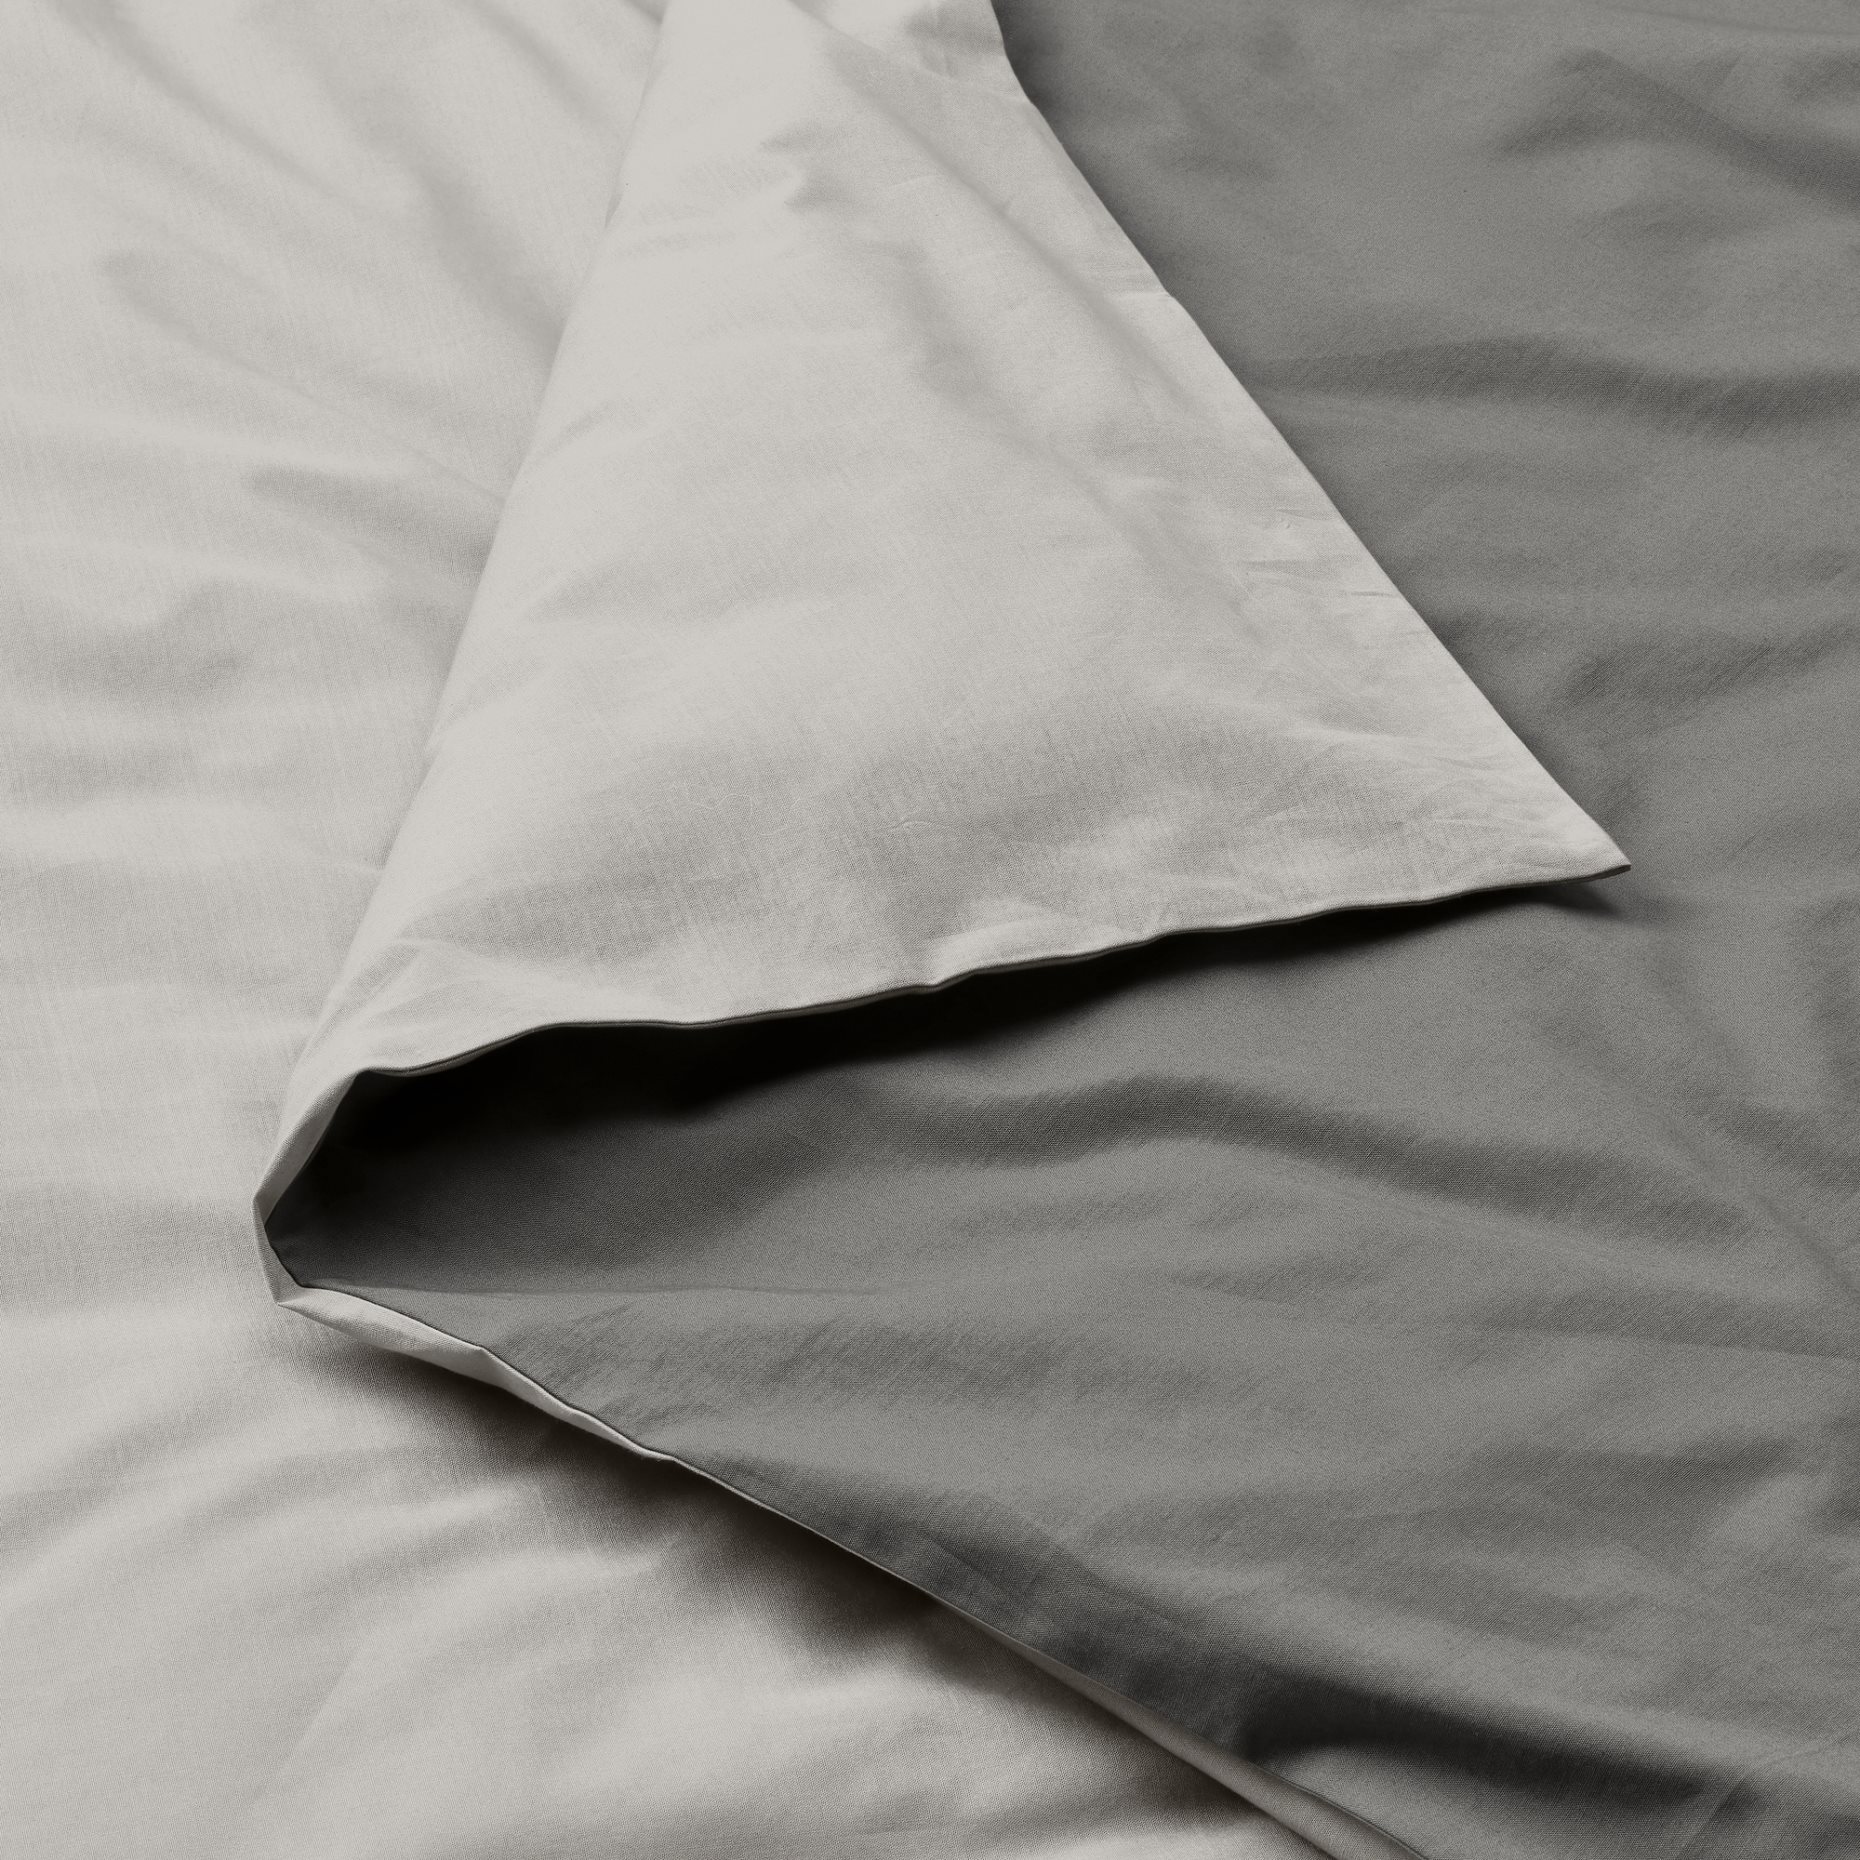 STRANDTALL, duvet cover and pillowcase, 150x200/50x60 cm, 005.006.44